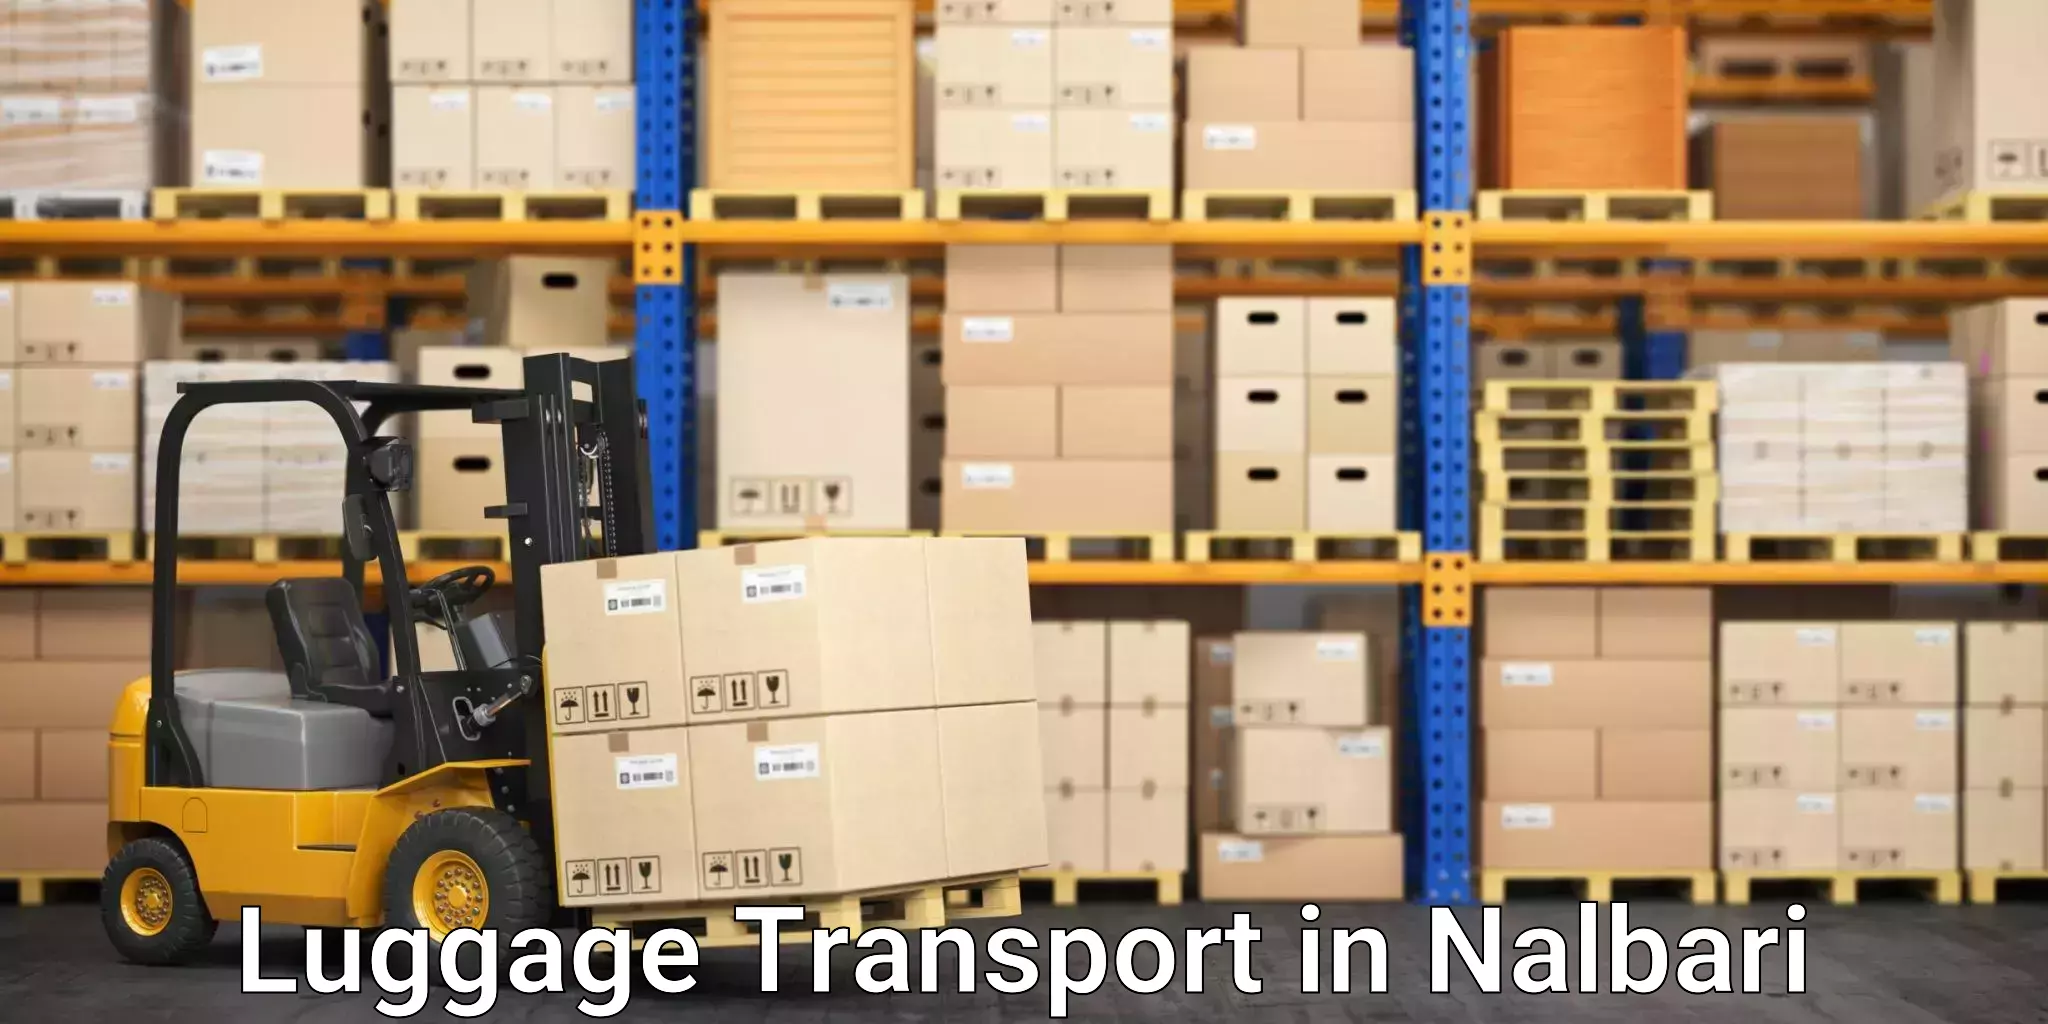 Luggage shipment processing in Nalbari